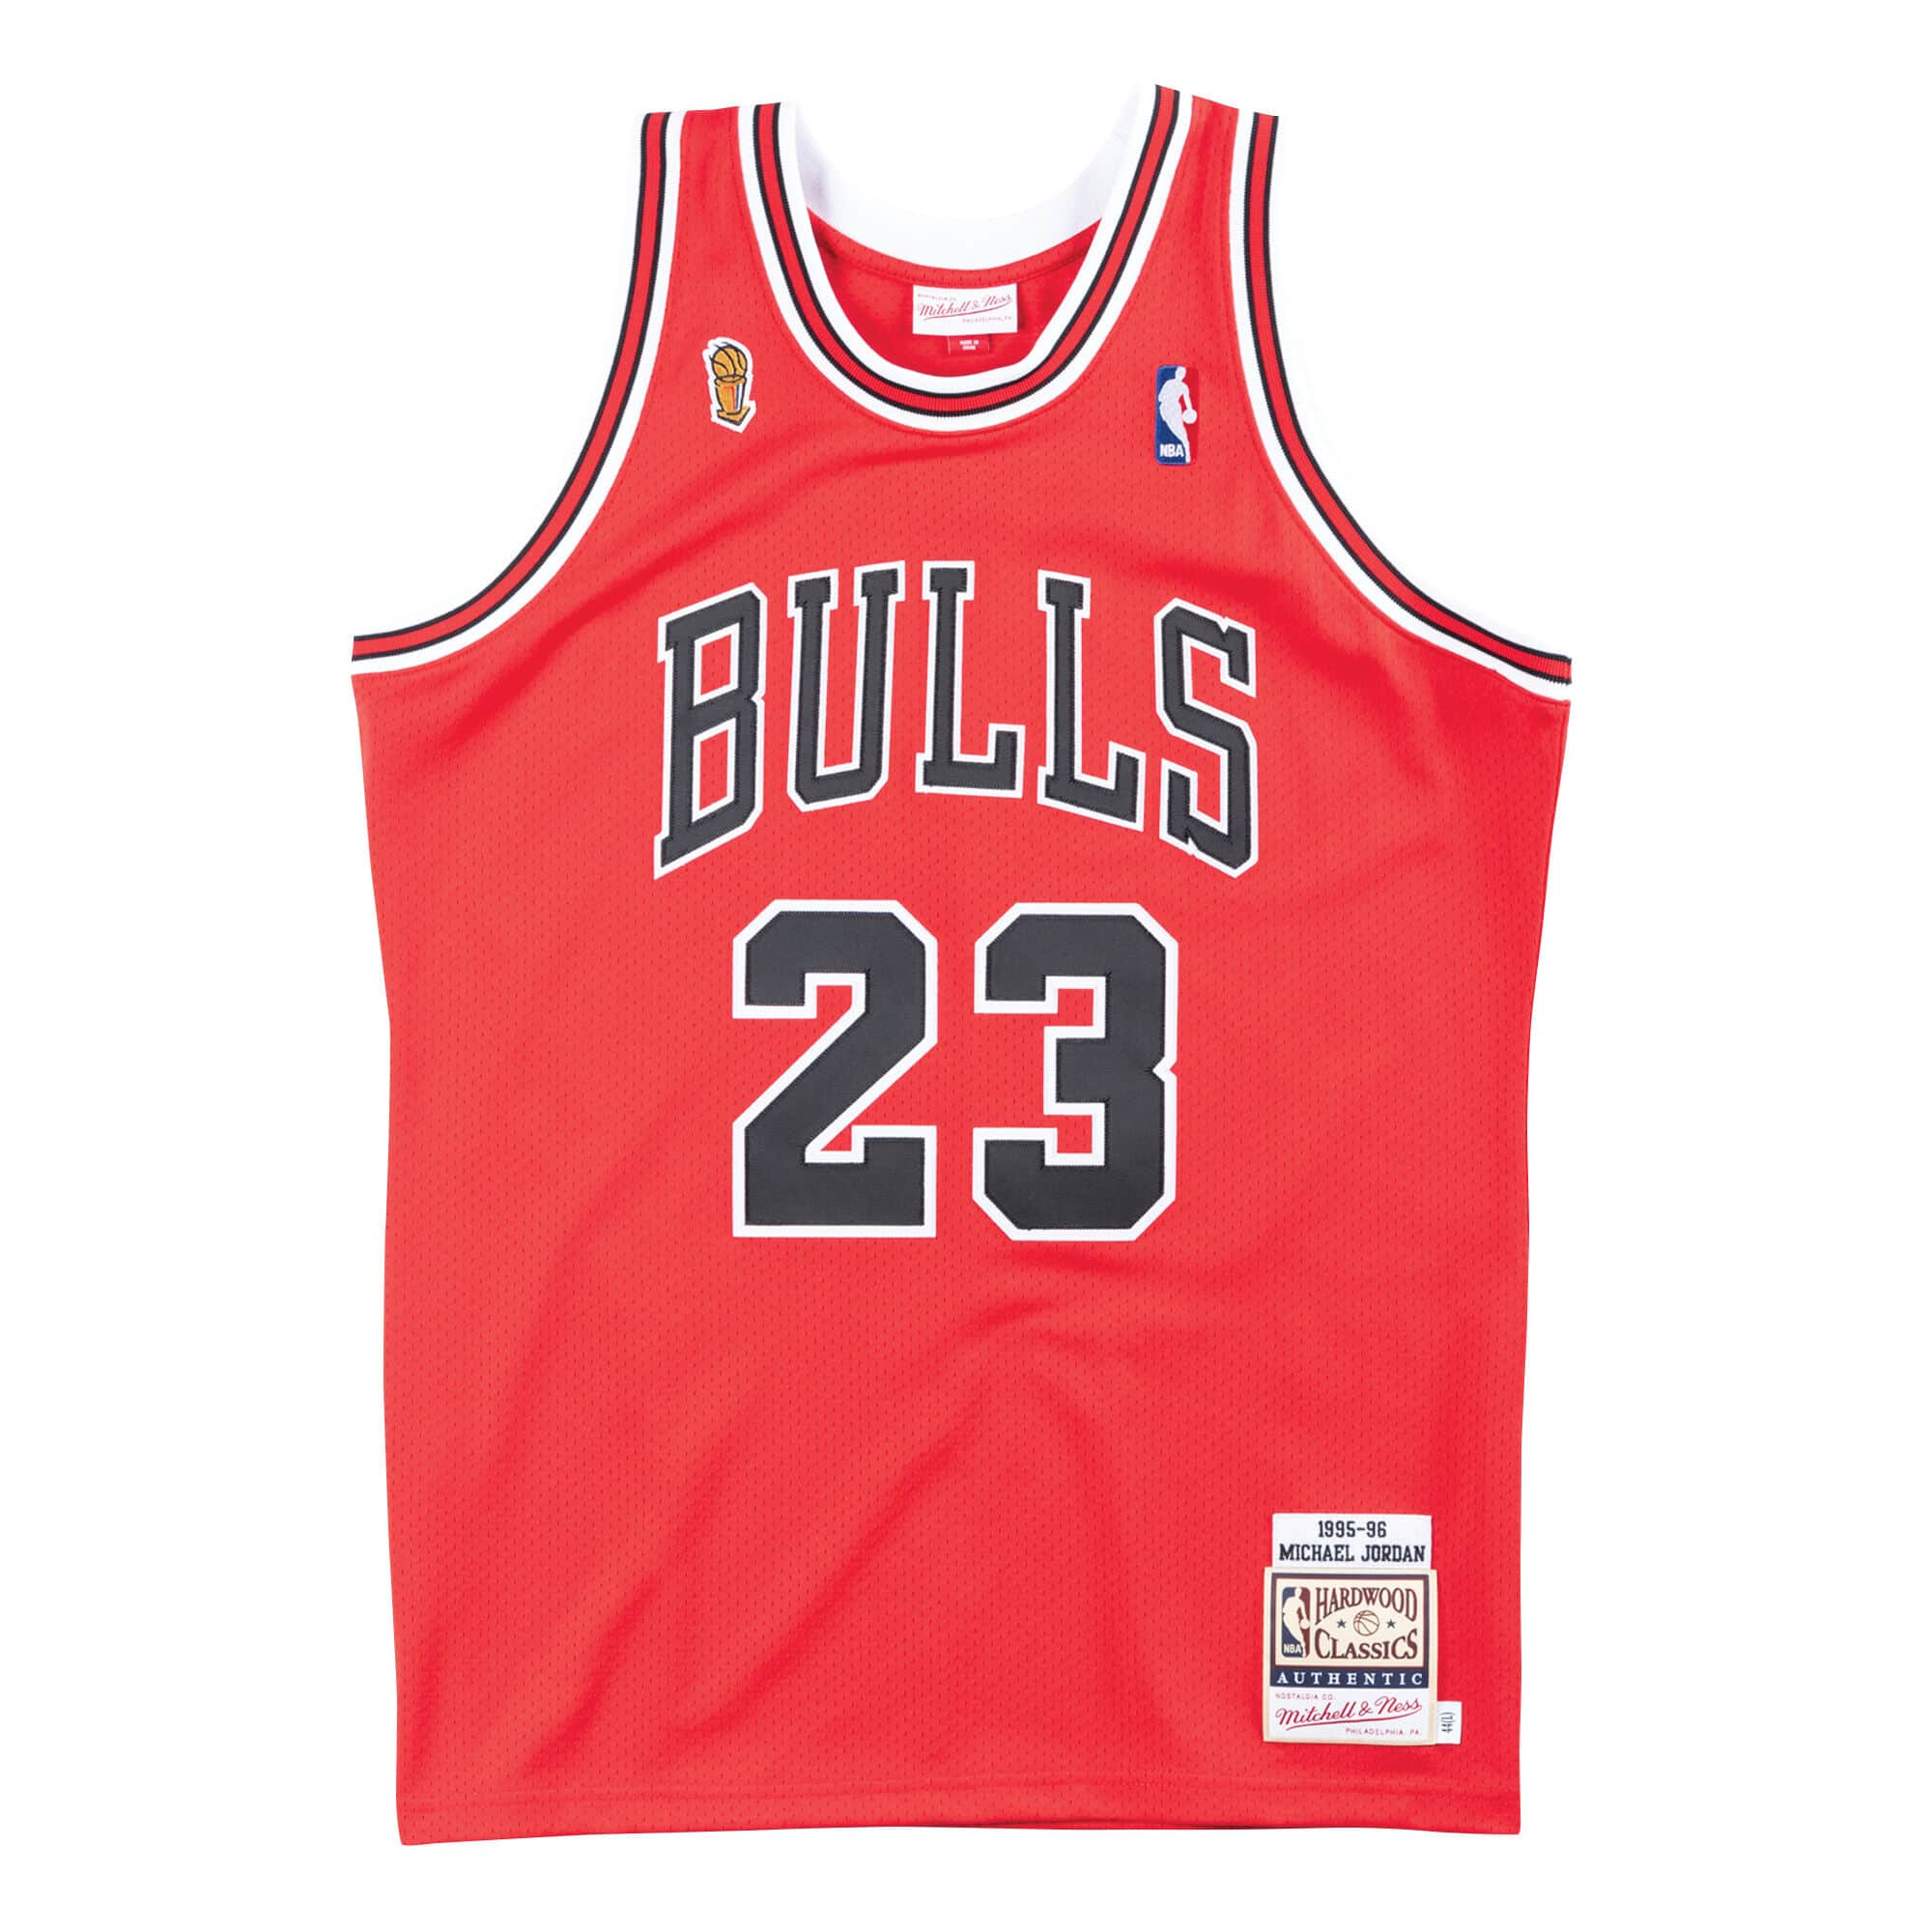 Jersey Chicago Bulls Road Finals 1995-96 Michael Jordan